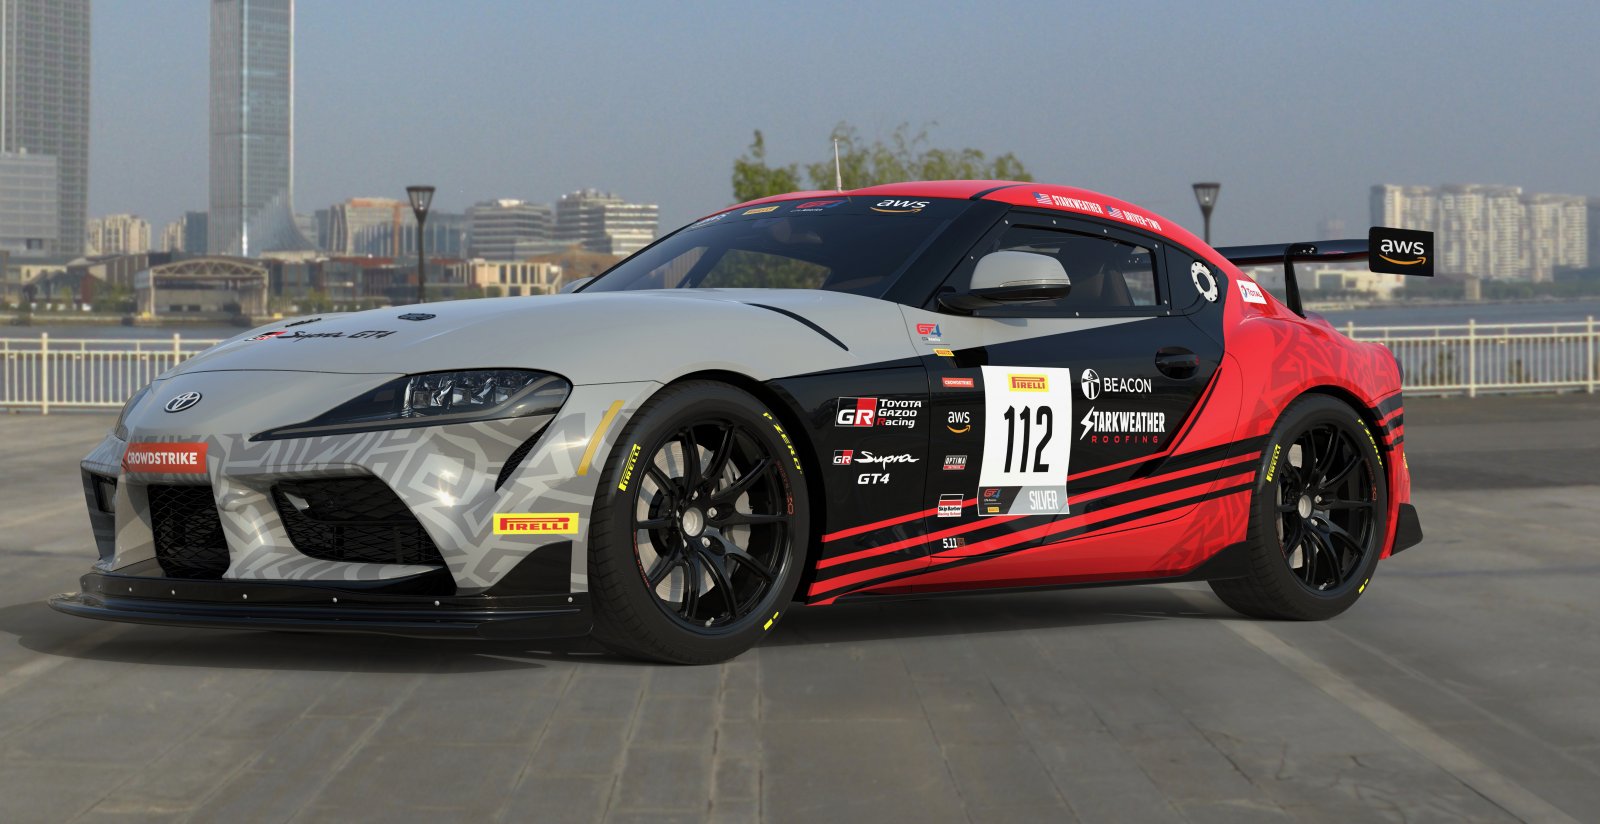 Dominic Starkweather Joins Dexter Racing for SRO Pirelli GT4 America